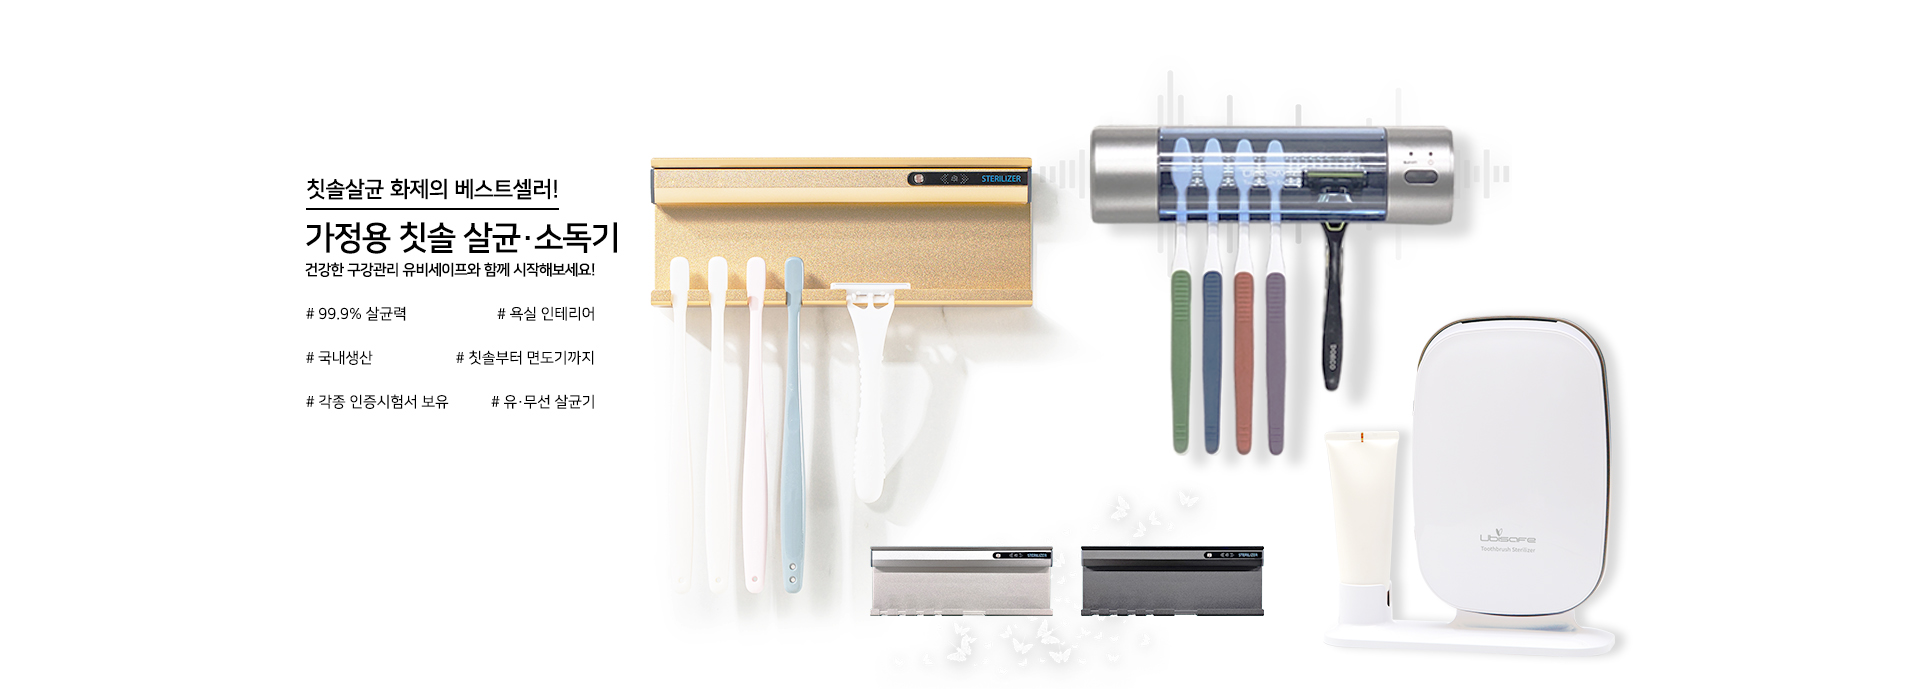 HCS-5000: Toothbrush & Razor Sterilizer